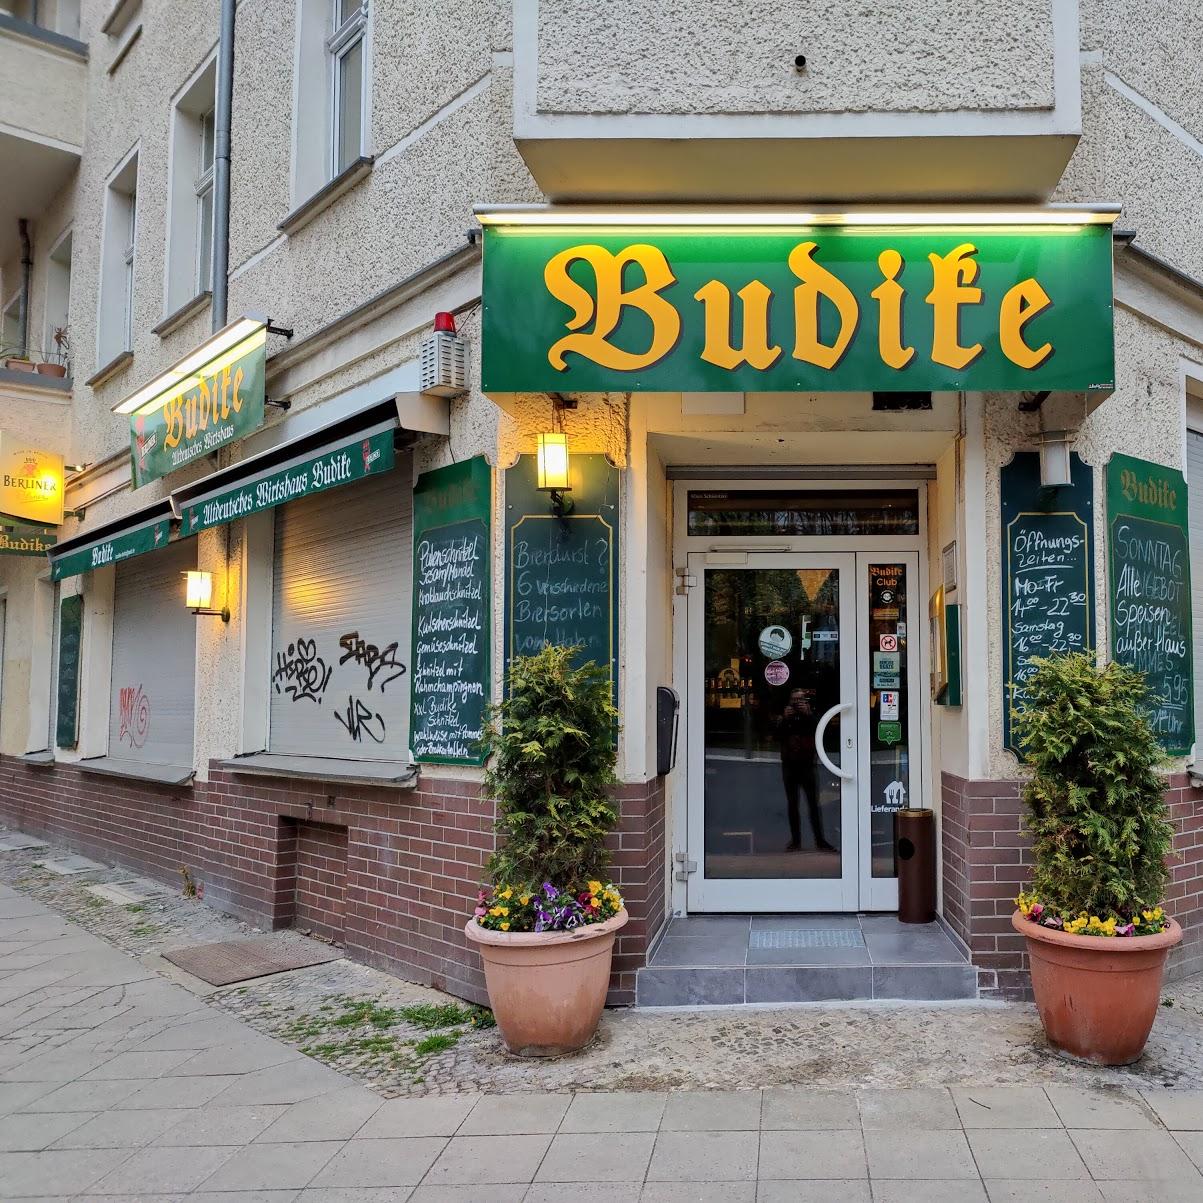 Restaurant "Budike" in Berlin